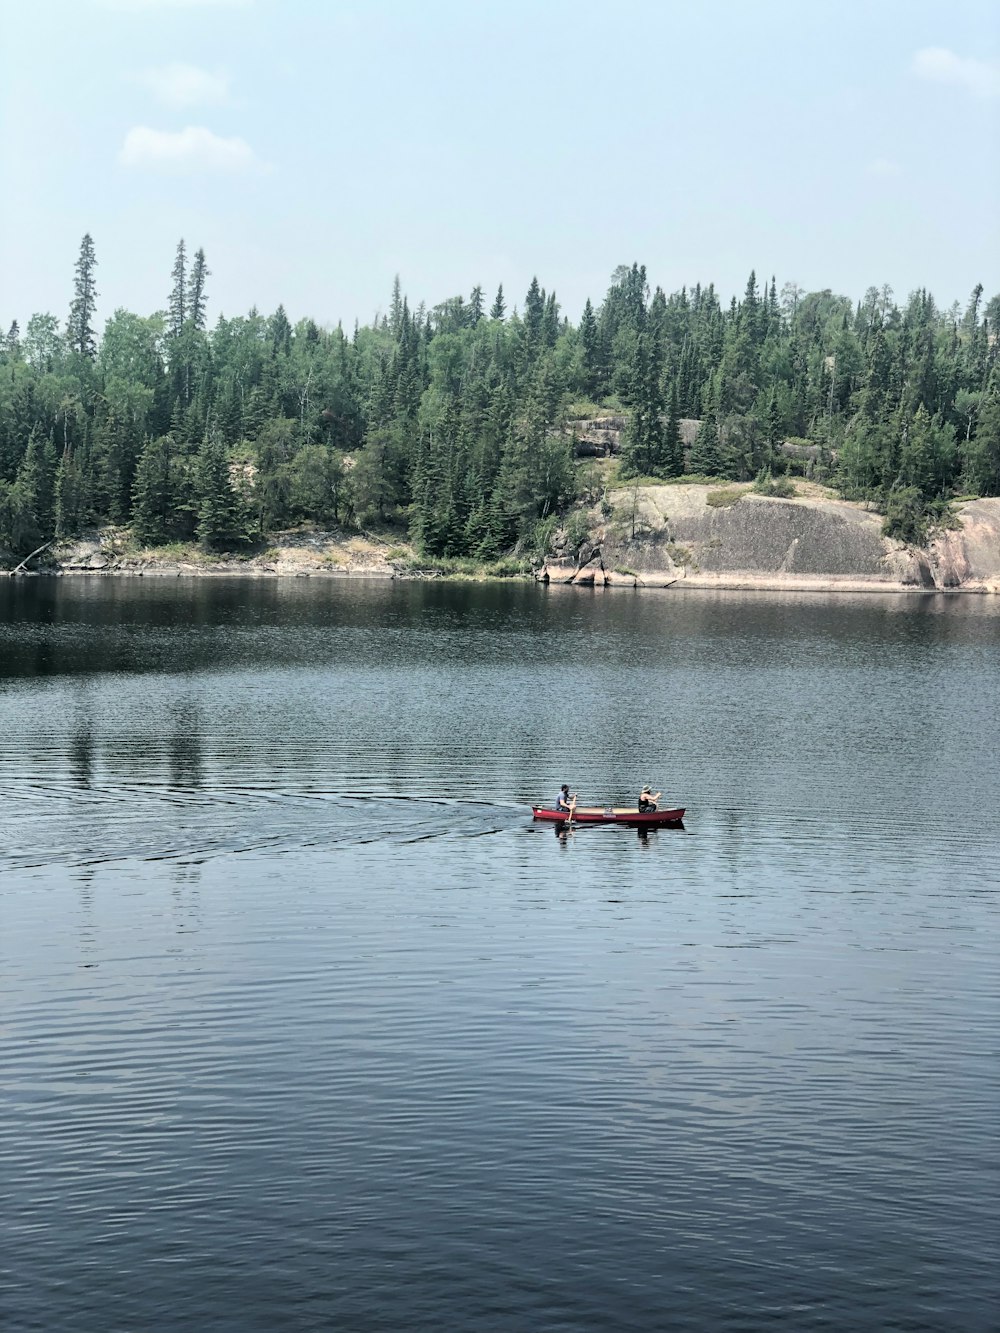 person riding on kayak near pine trees